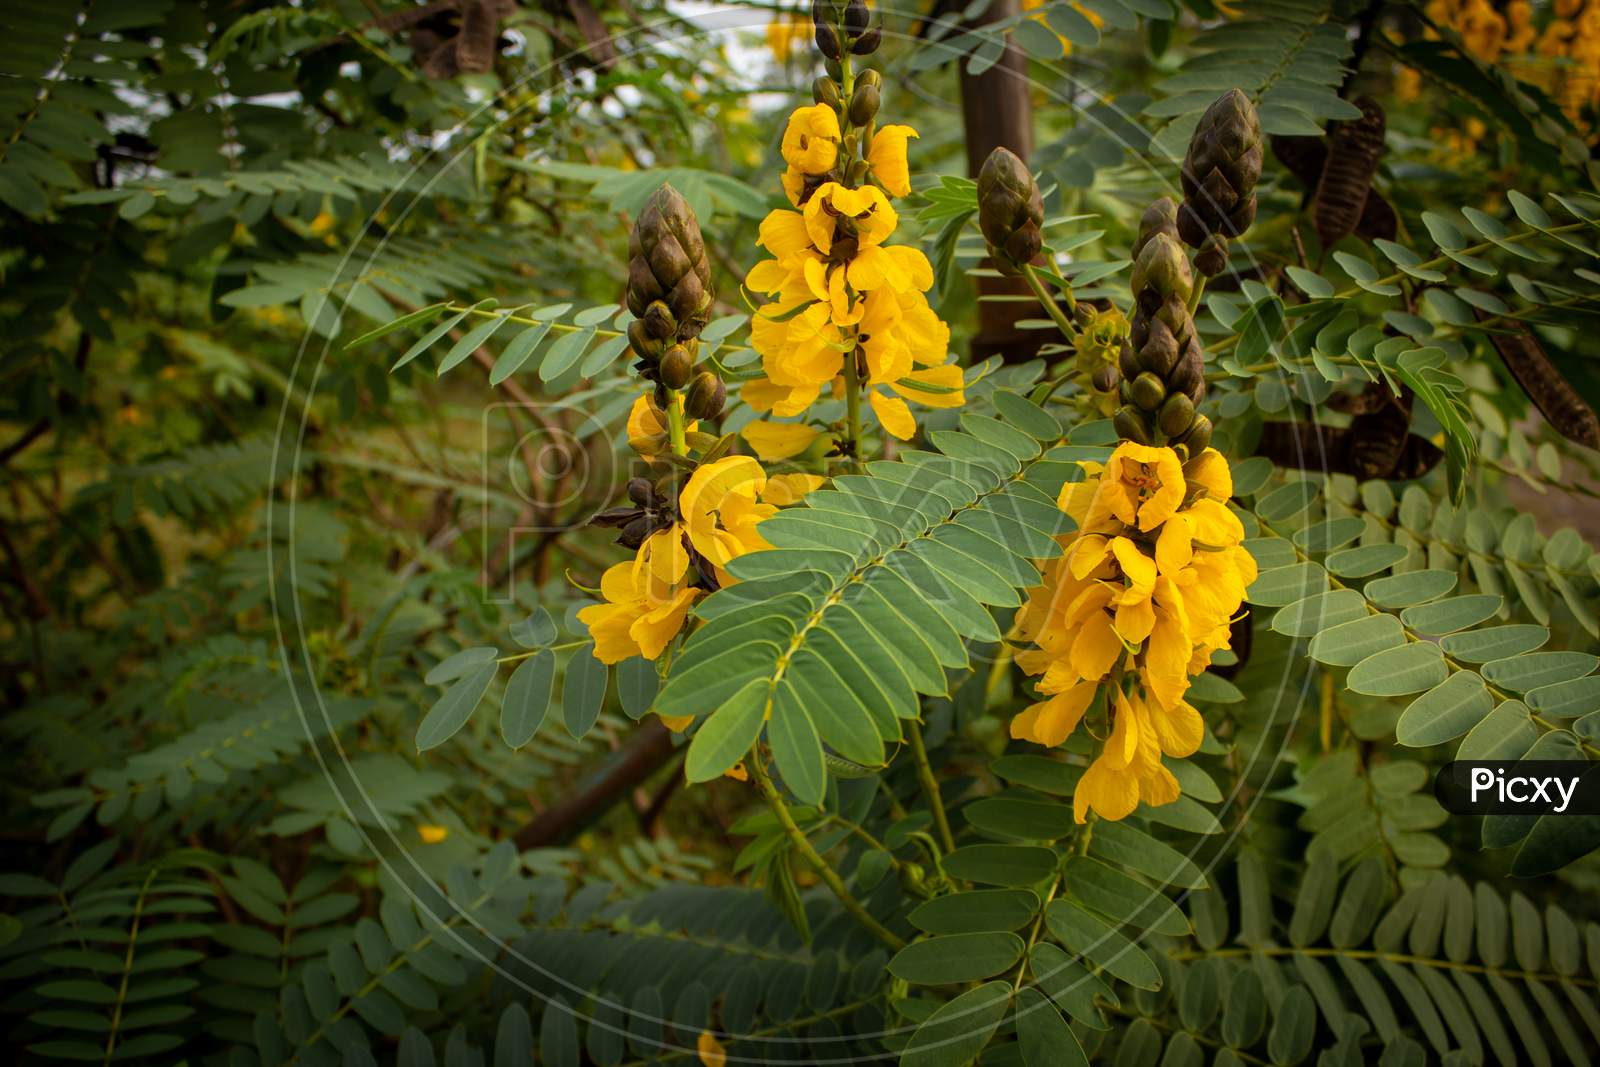 Beautiful Yellow Flowers Commonly Called As Popcorn Cassia (Senna Didymobotrya) Seen In Masinagudi, Mudumalai National Park, Tamil Nadu - Karnataka State Border, India.